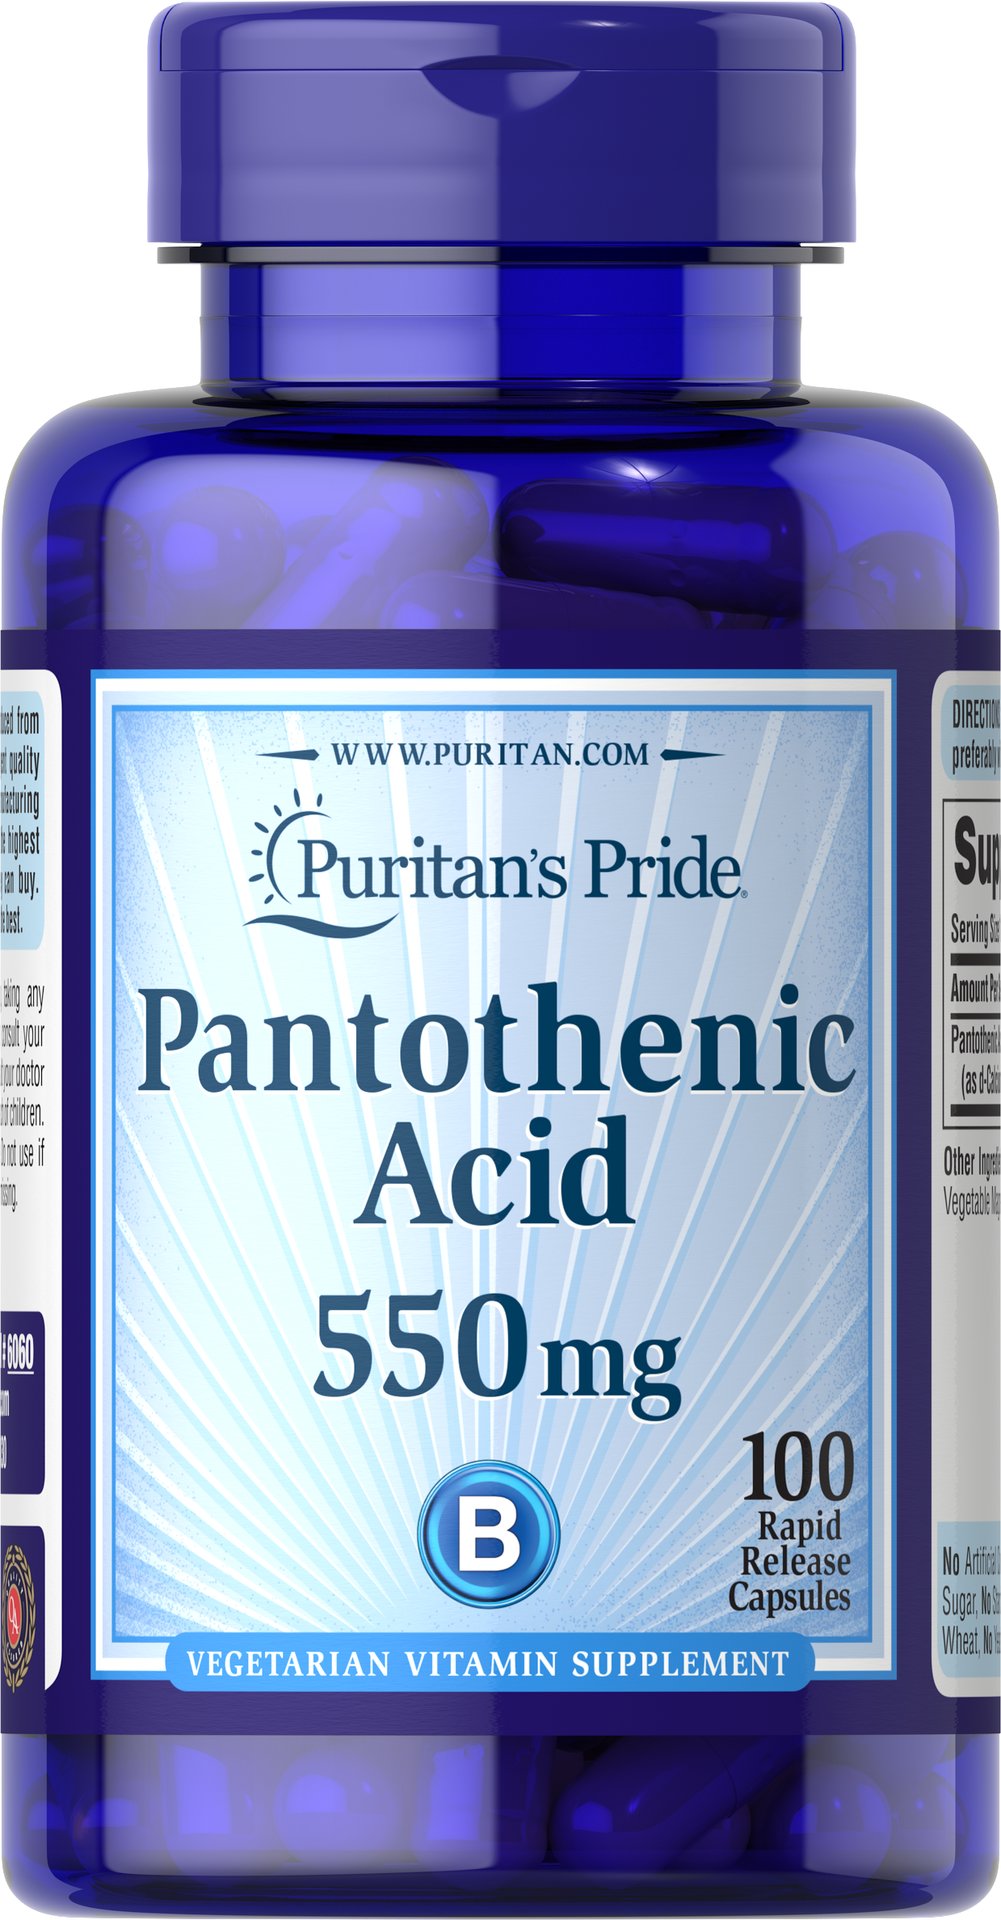 Pantothenic Acid 550 mg Rapid Release